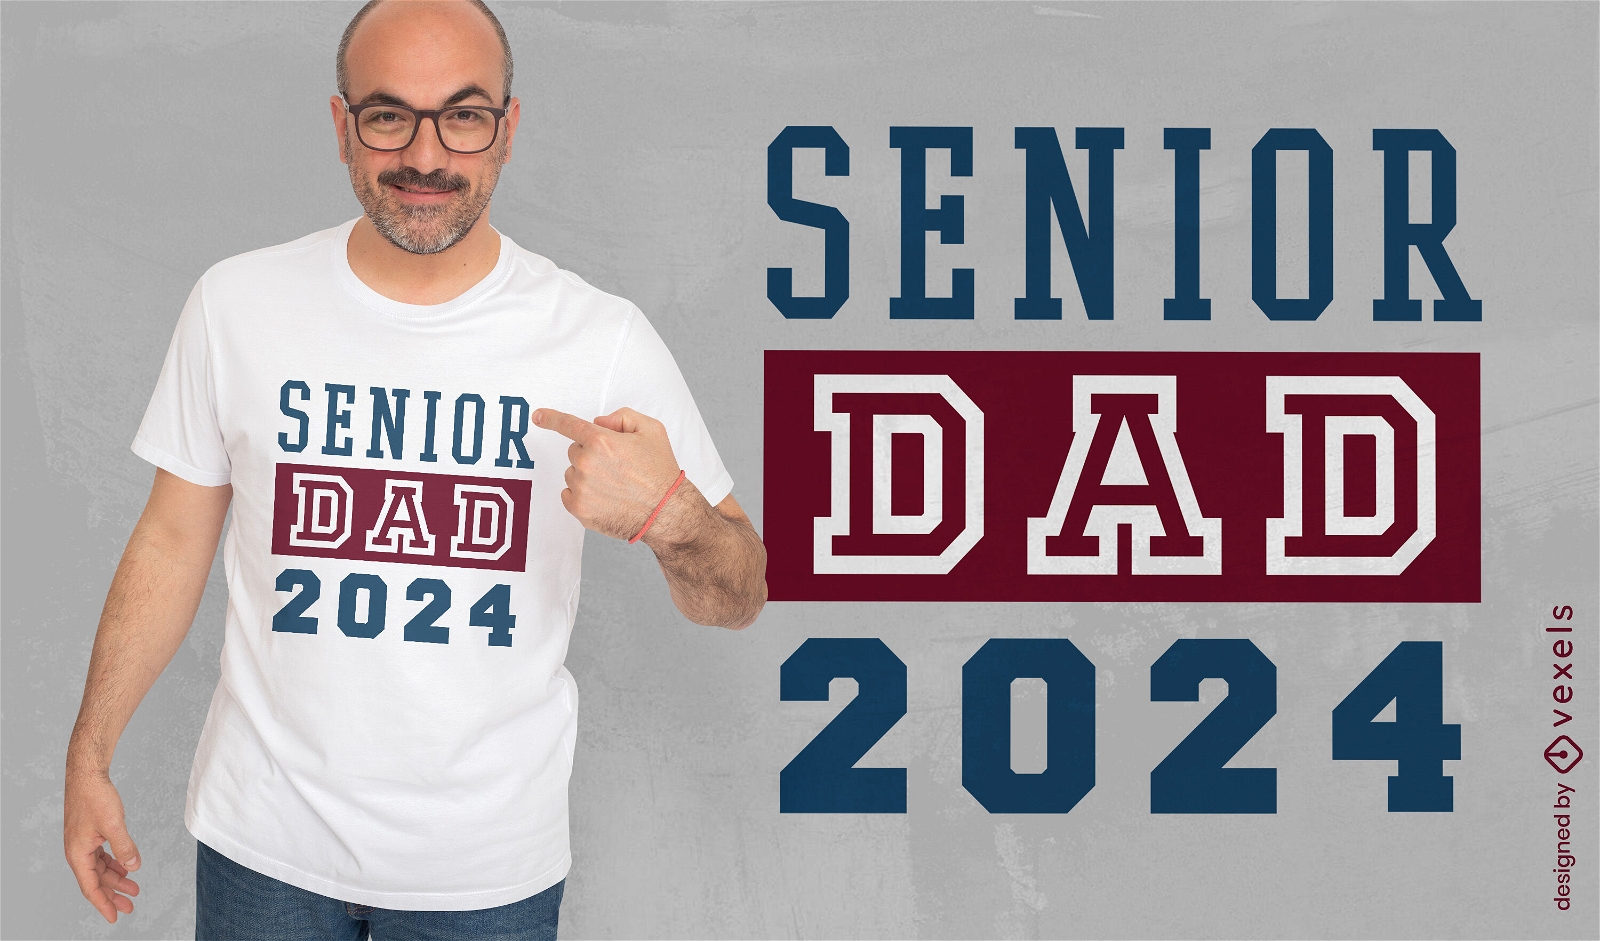 Senior Dad 2024 t-shirt design